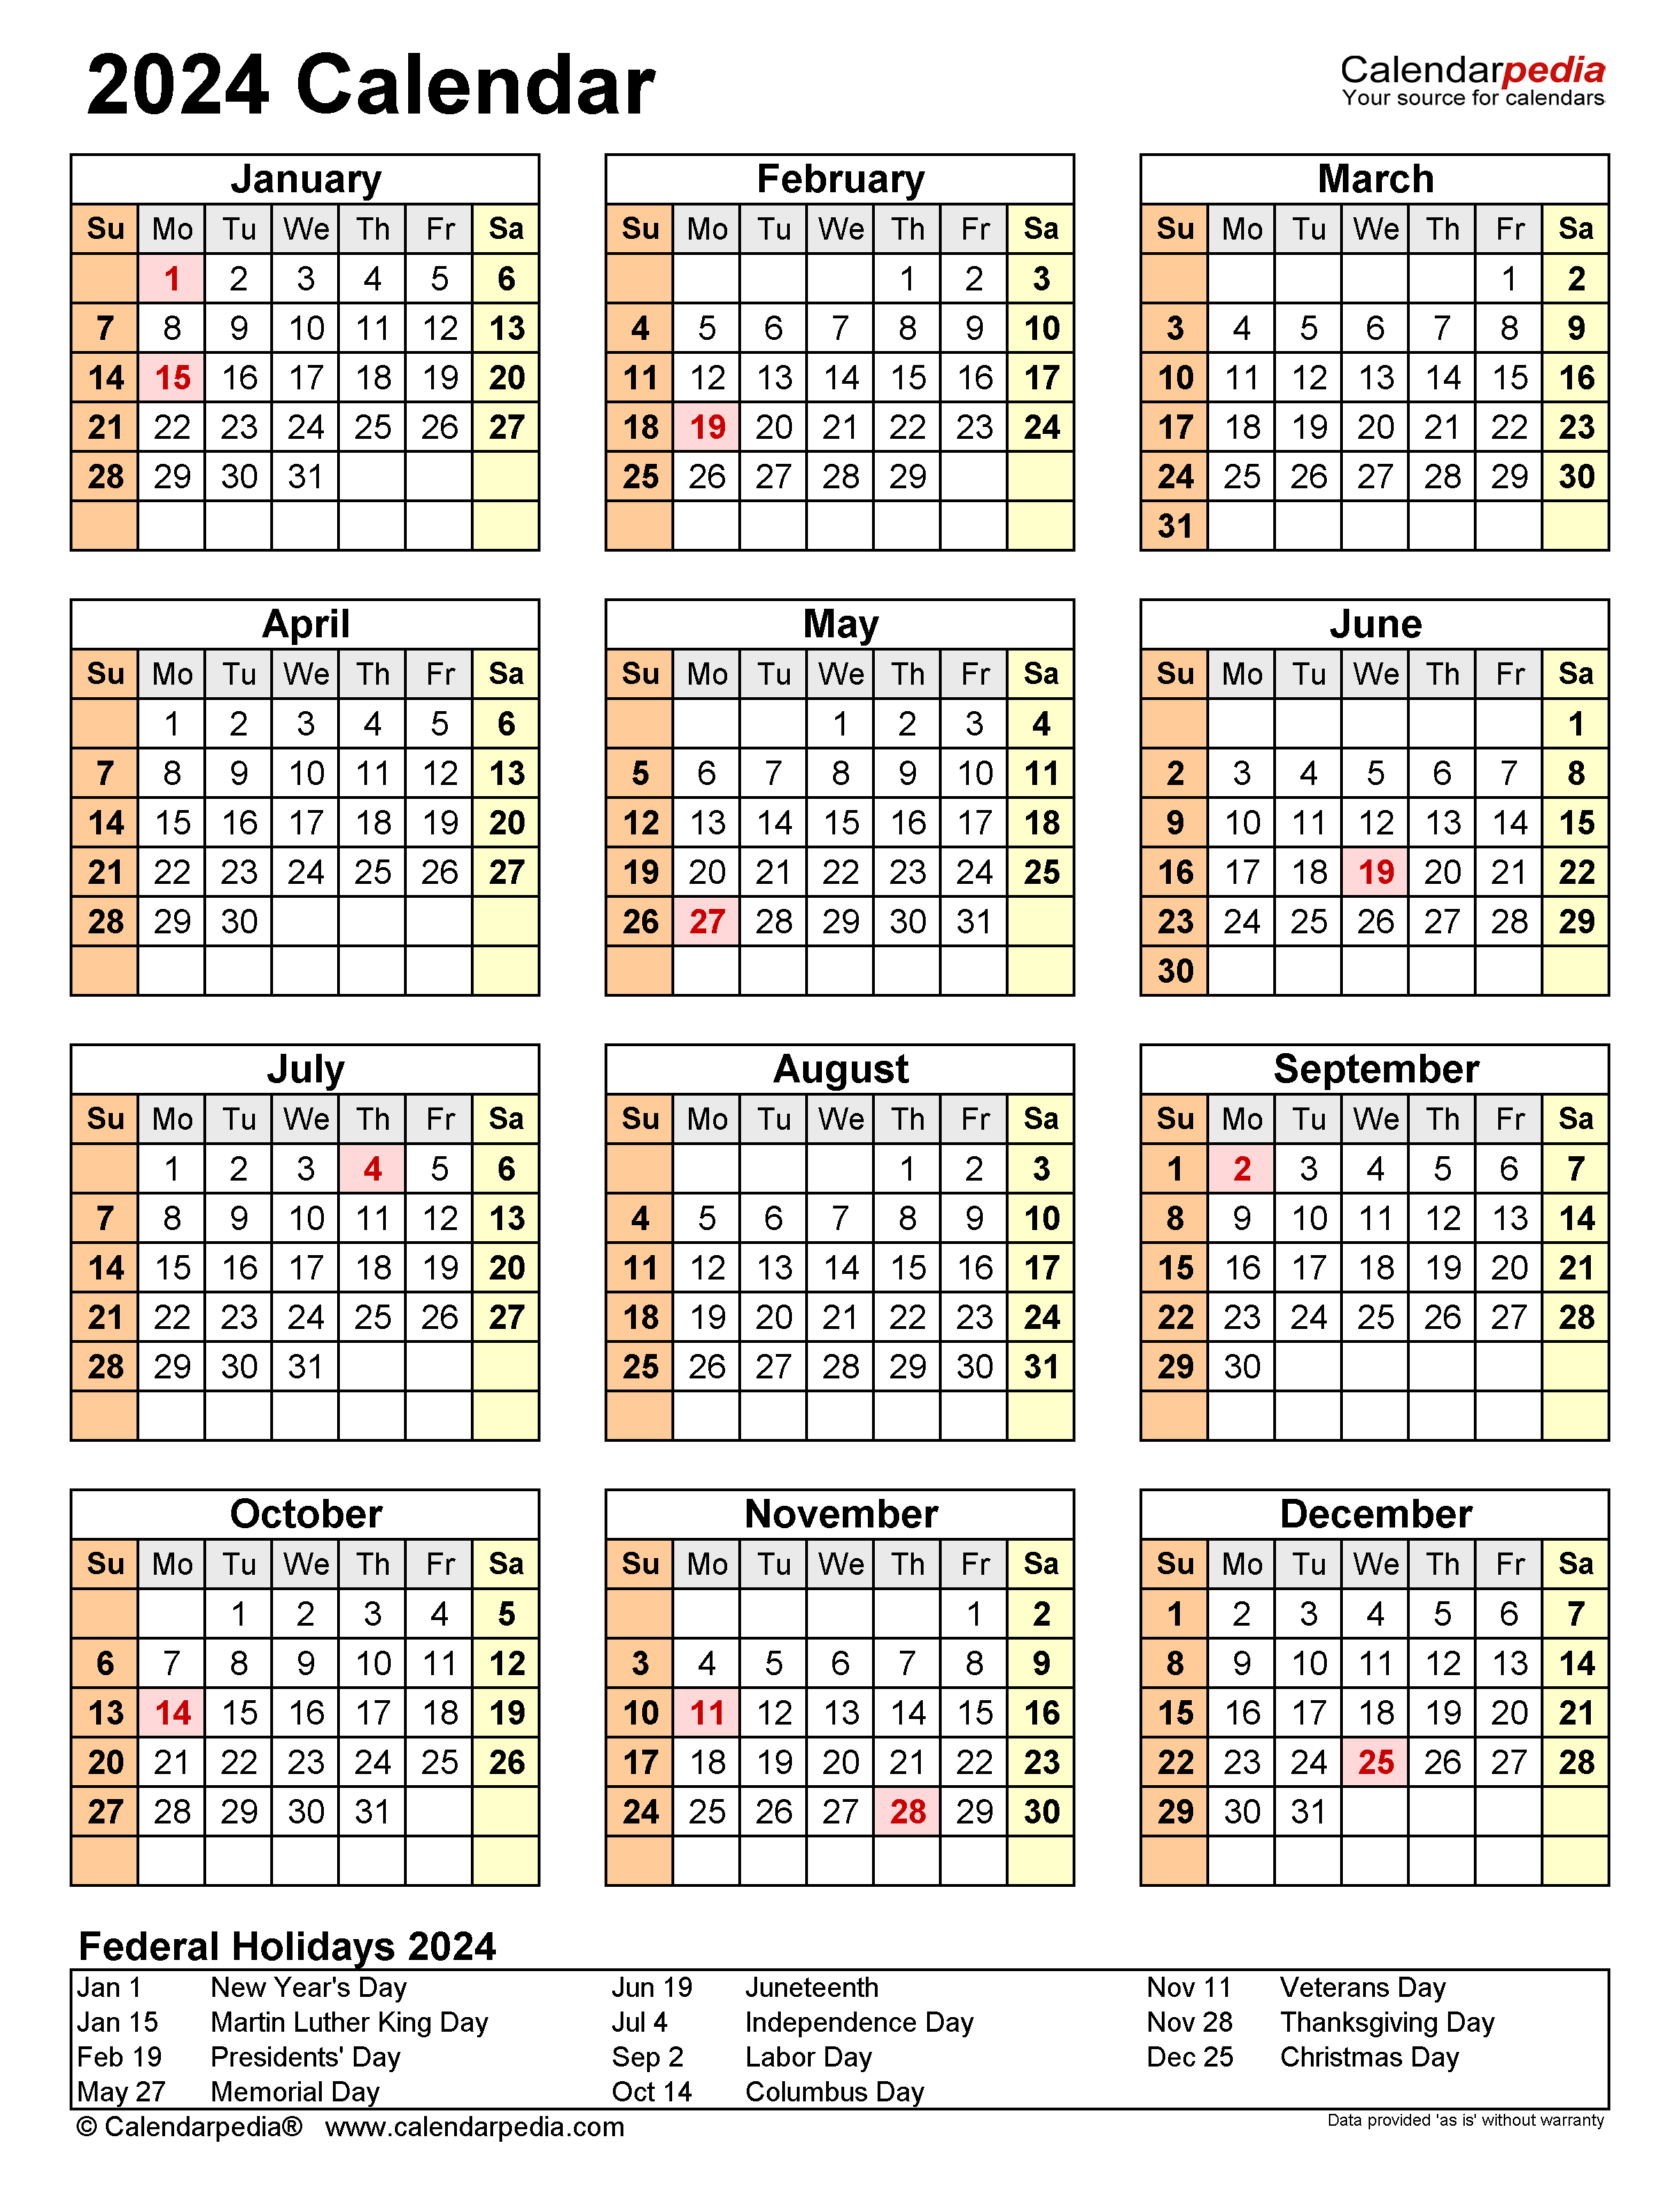 Free Printable 2024 Calendar With Holidays Crownflourmills | Free Printable 2024 Calendar With Holidays Wincalendar